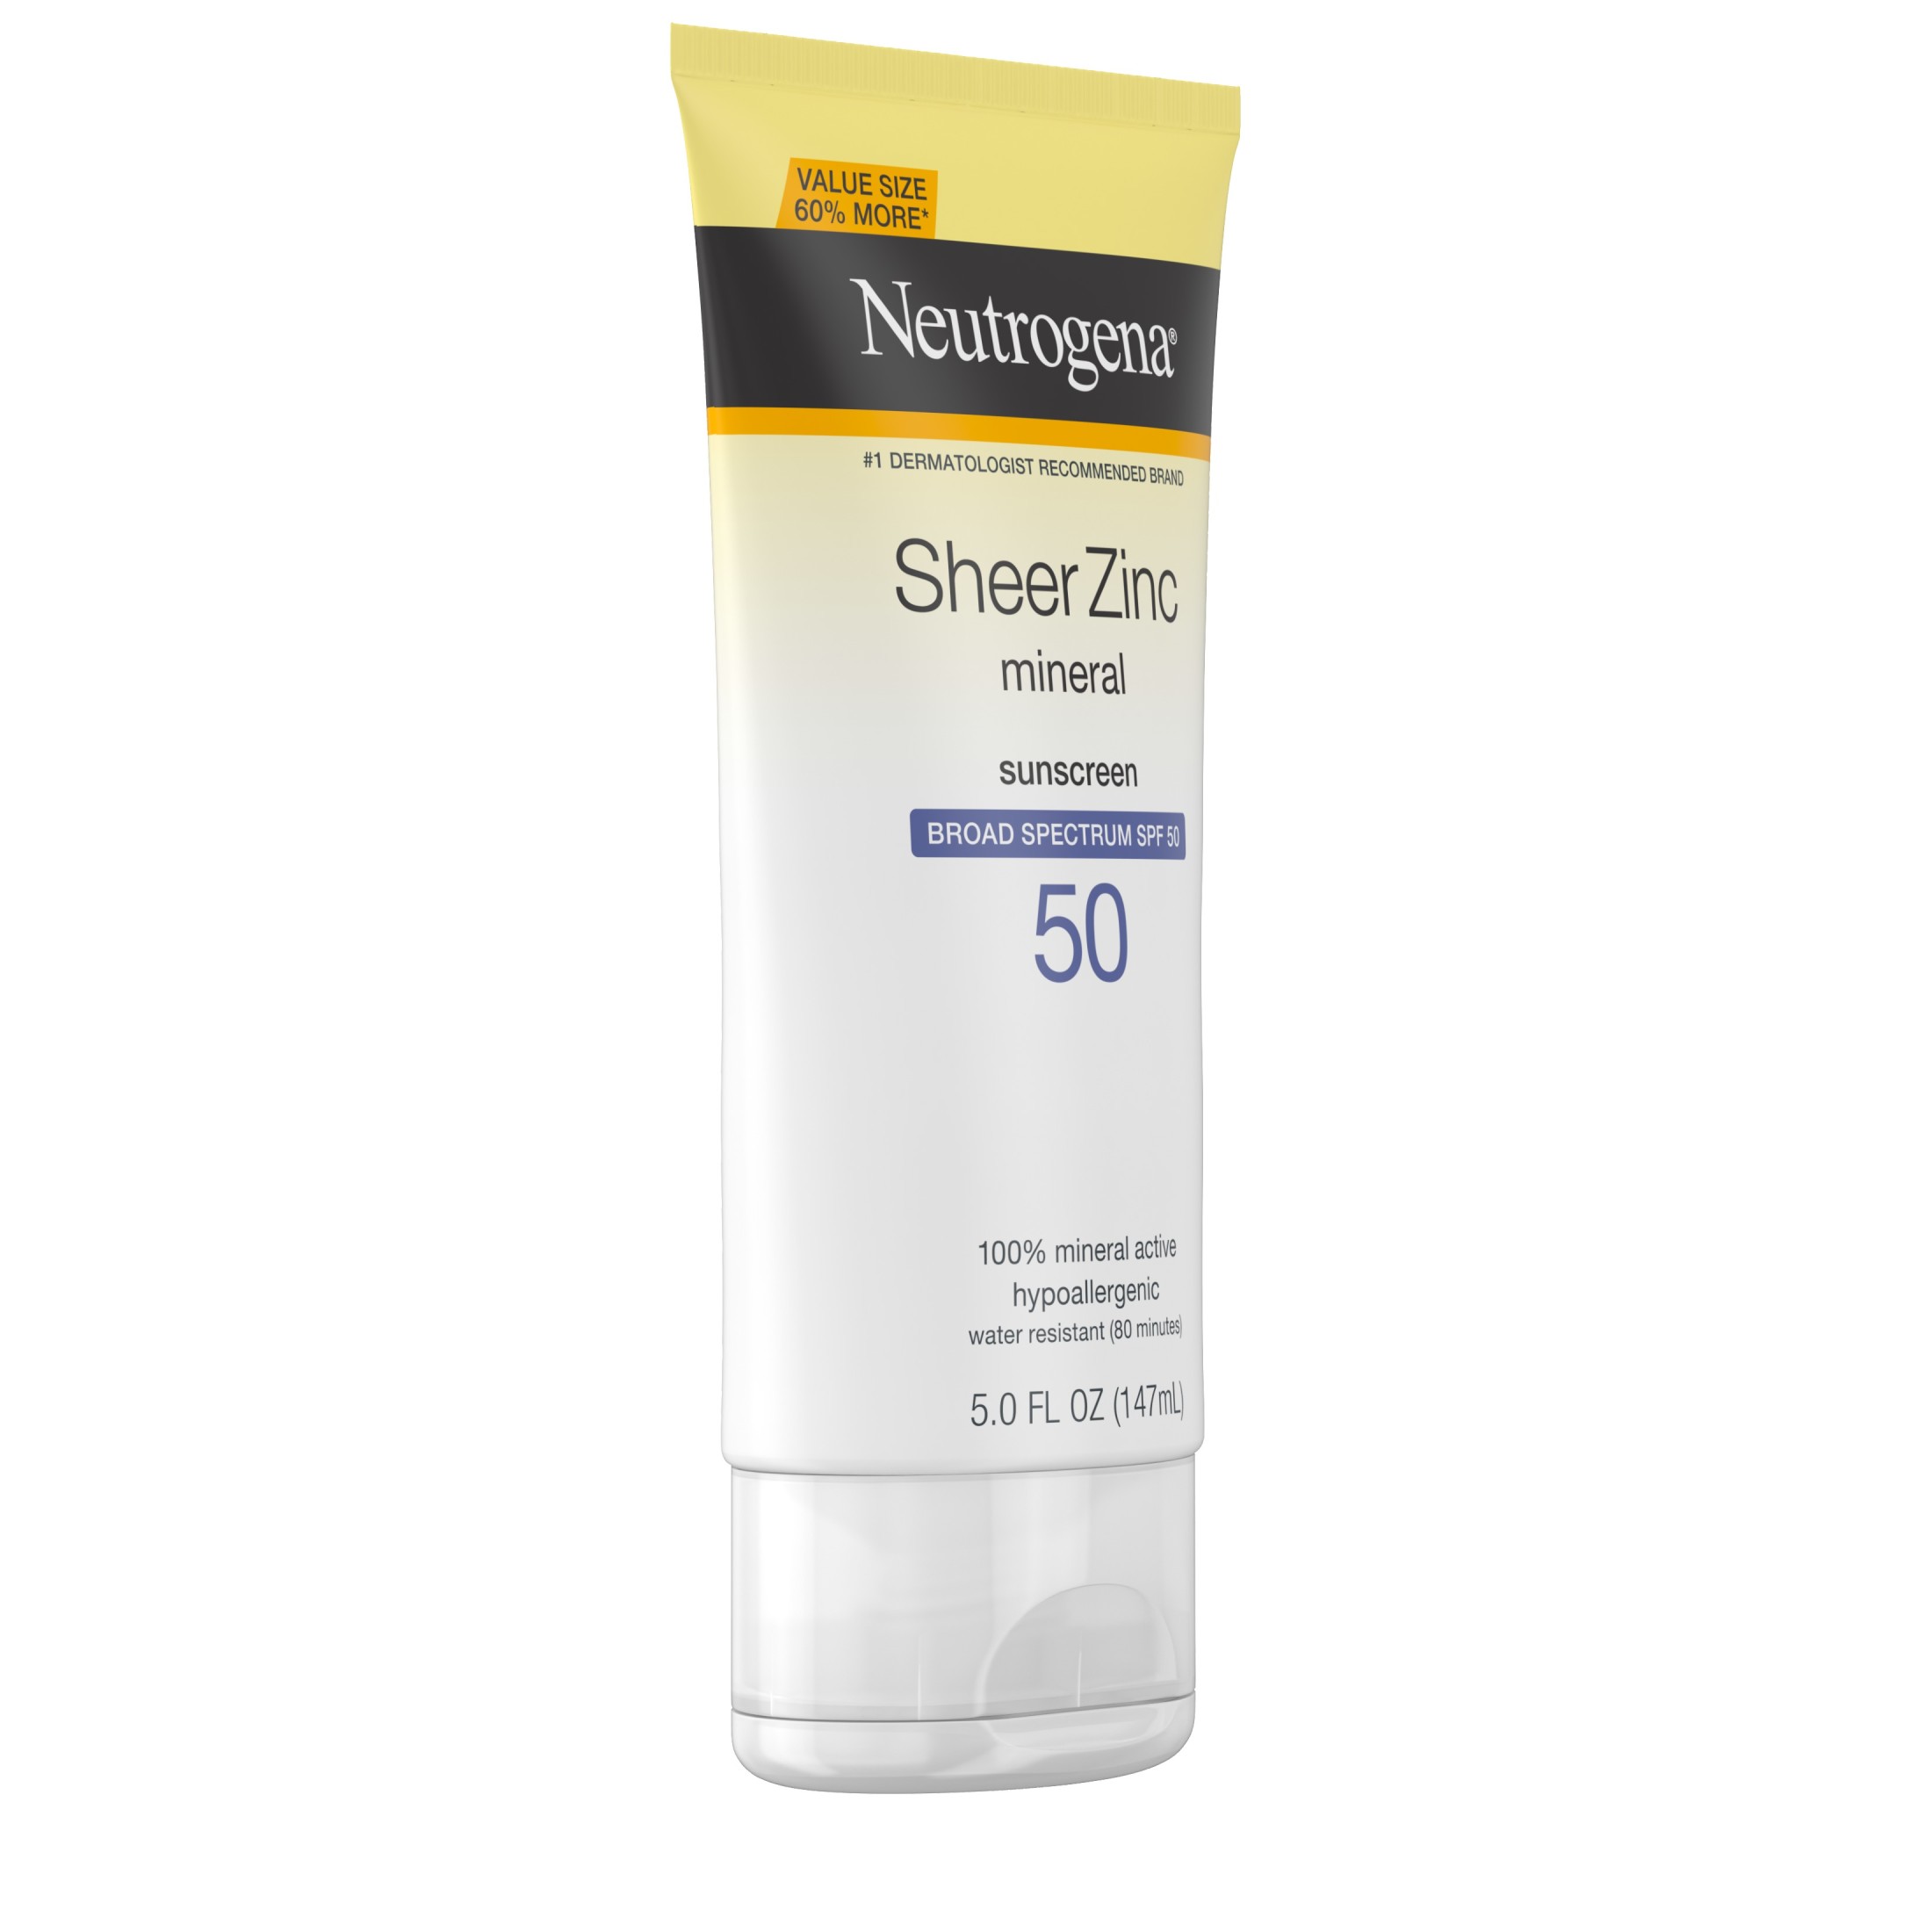 Neutrogena Sheer Zinc Sunscreen Lotion SPF 50, Value-Size, 5 fl. oz - image 4 of 9